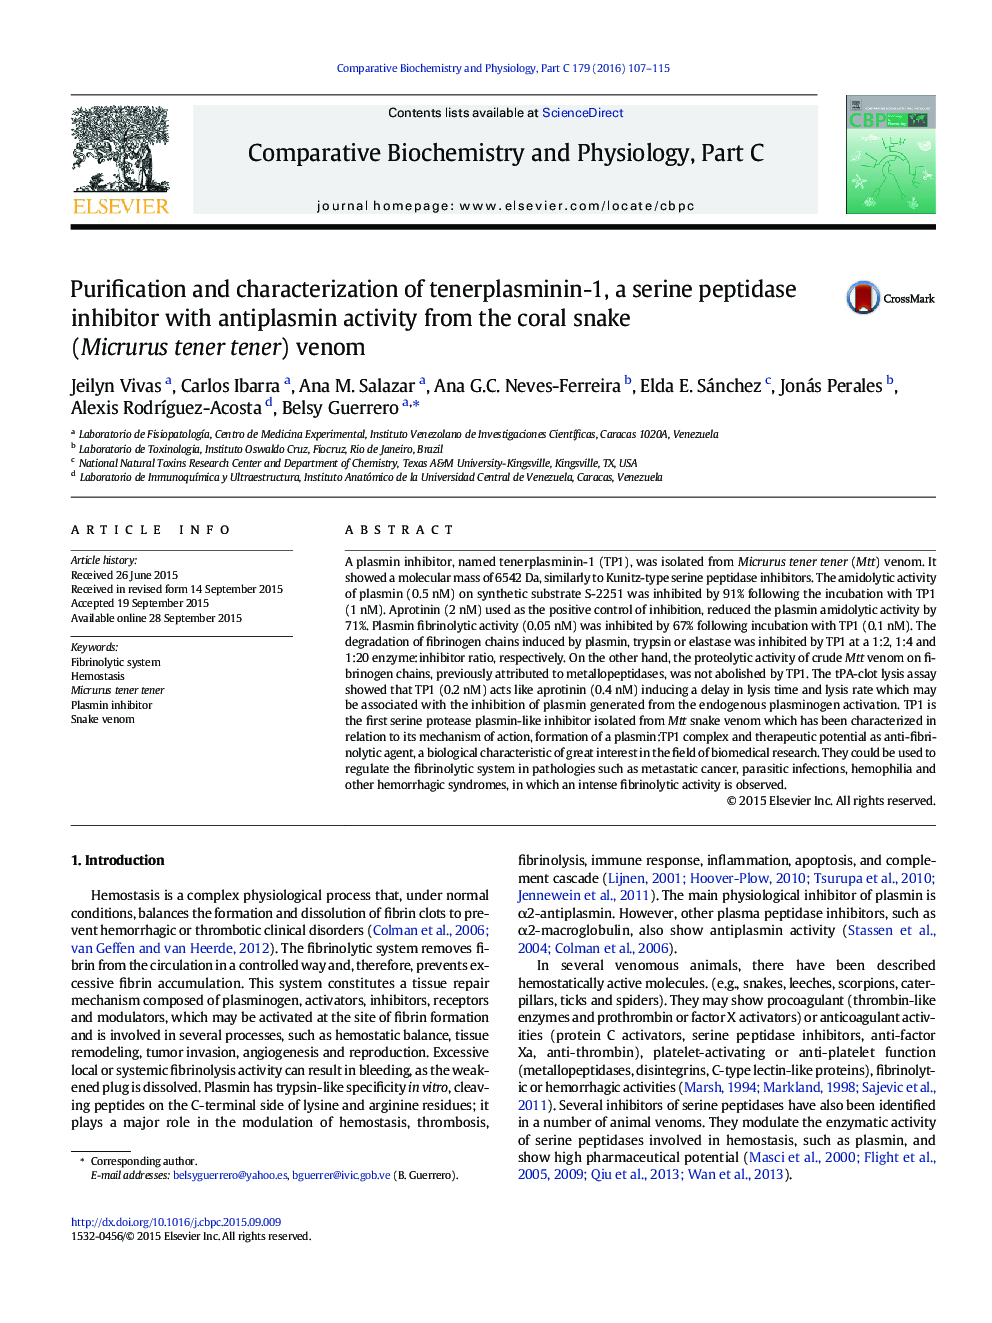 Purification and characterization of tenerplasminin-1, a serine peptidase inhibitor with antiplasmin activity from the coral snake (Micrurus tener tener) venom